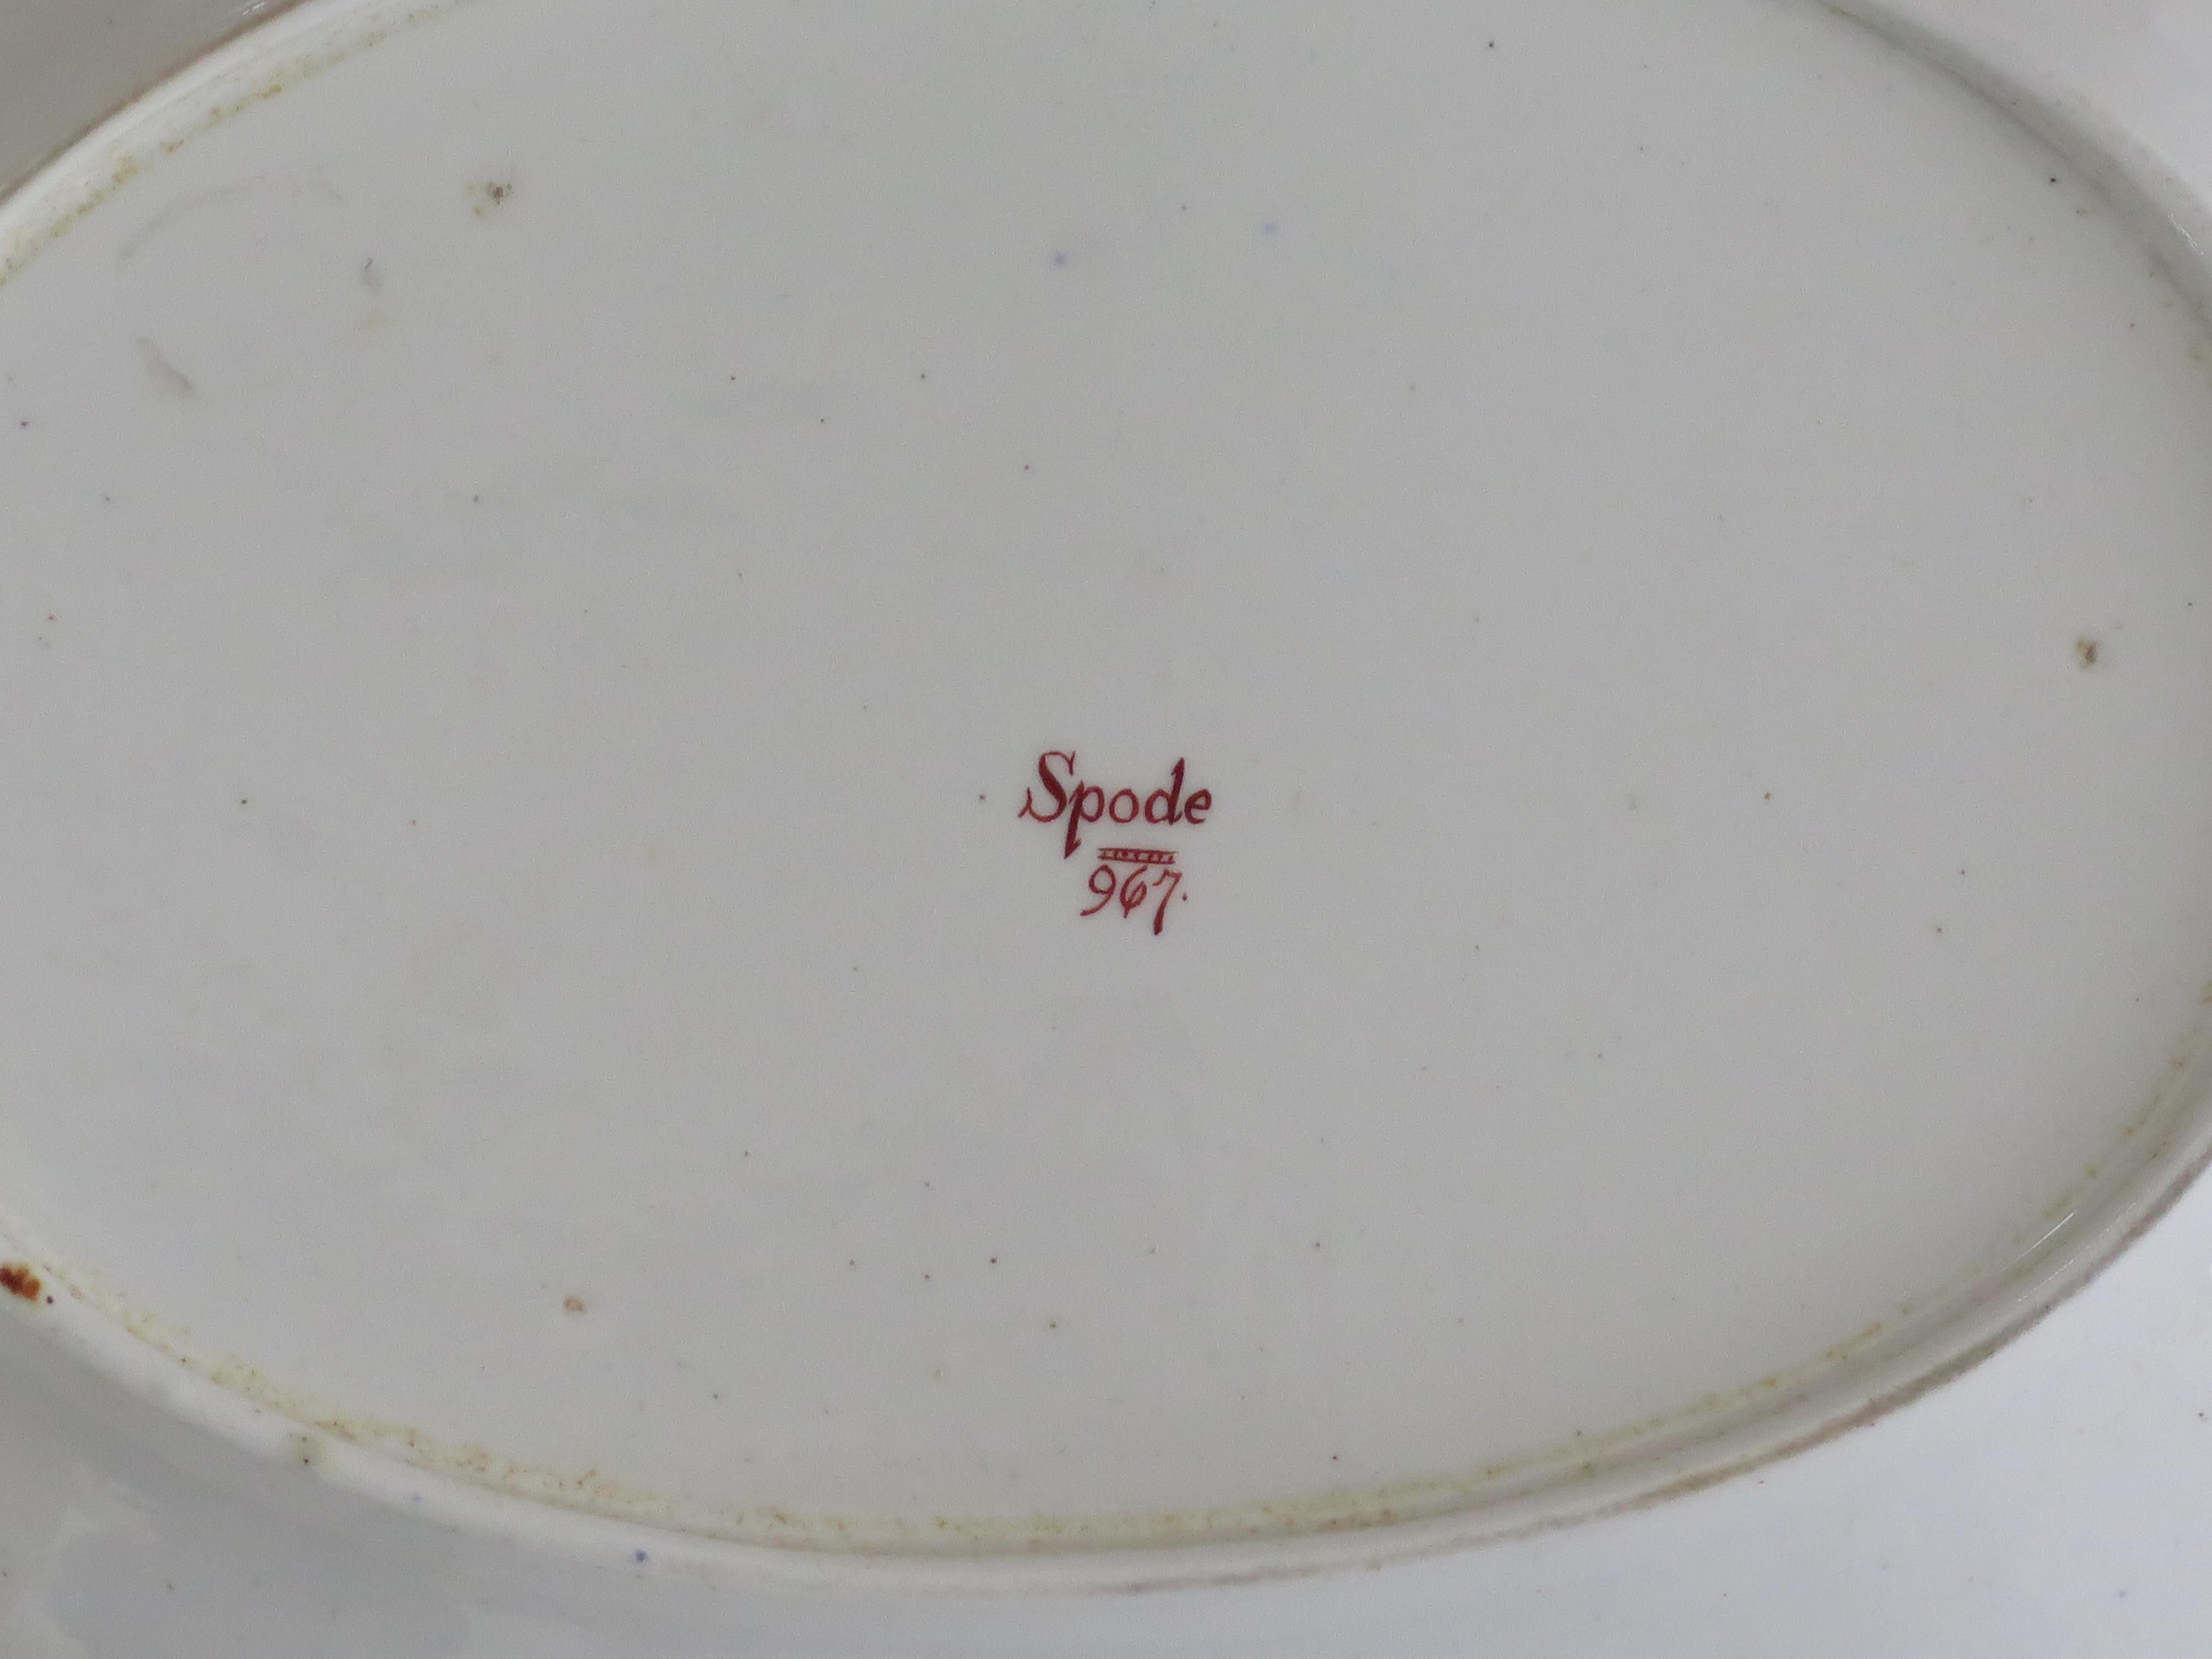 Spode Porcelain Serving Platter or Dish Hand Painted & Gilded Ptn 967 circa 1810 For Sale 5